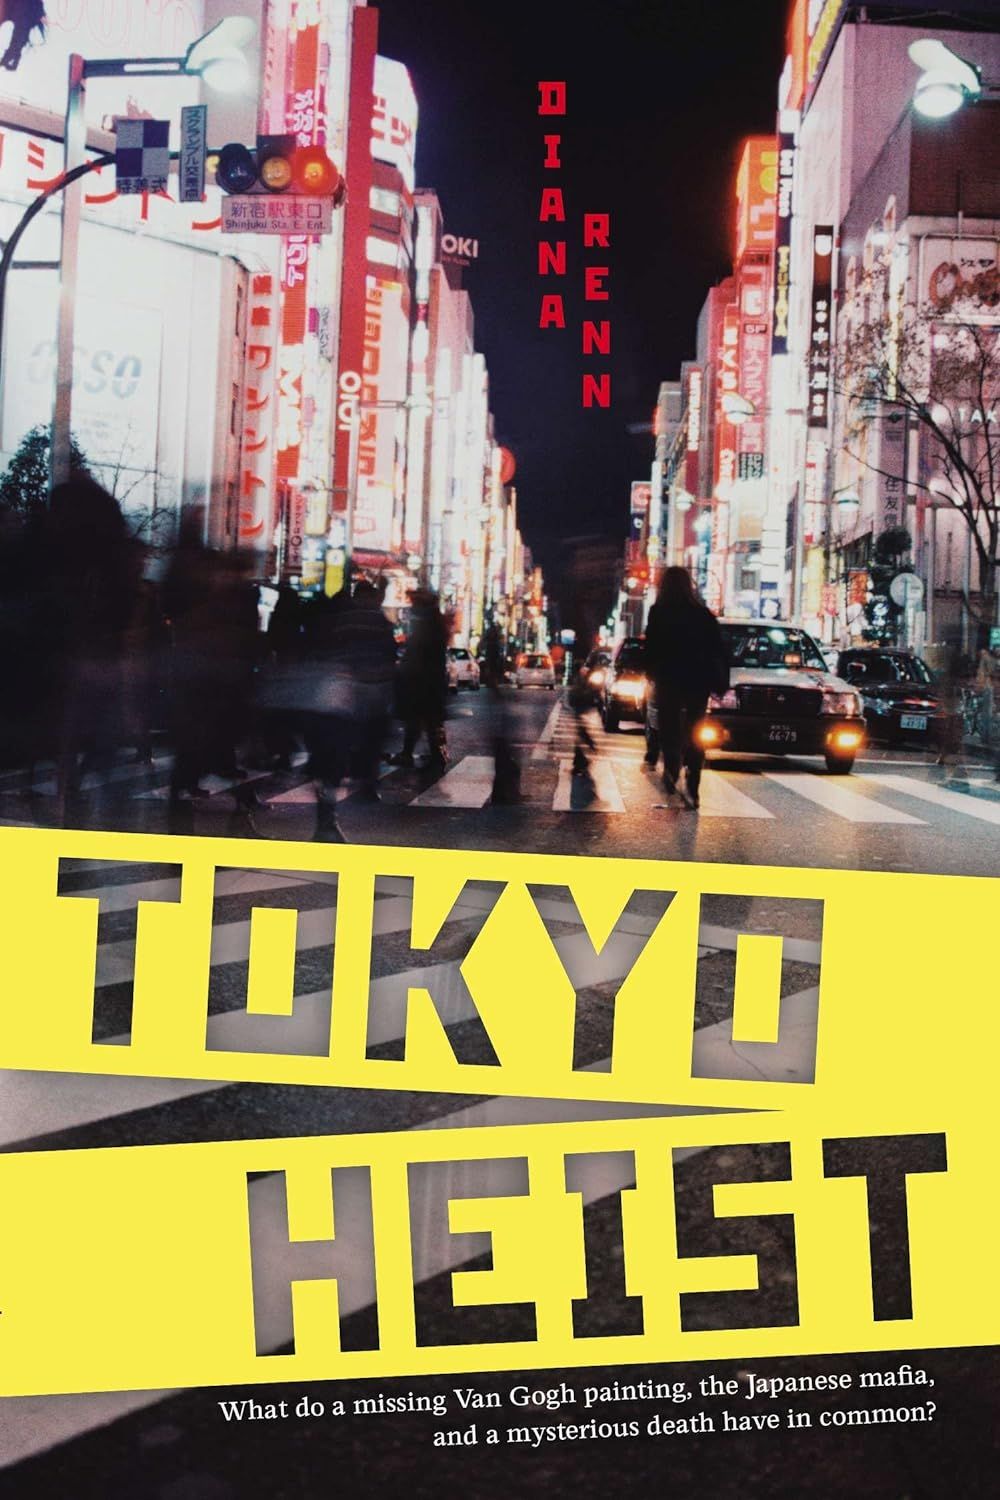 Tokyo Heist cover